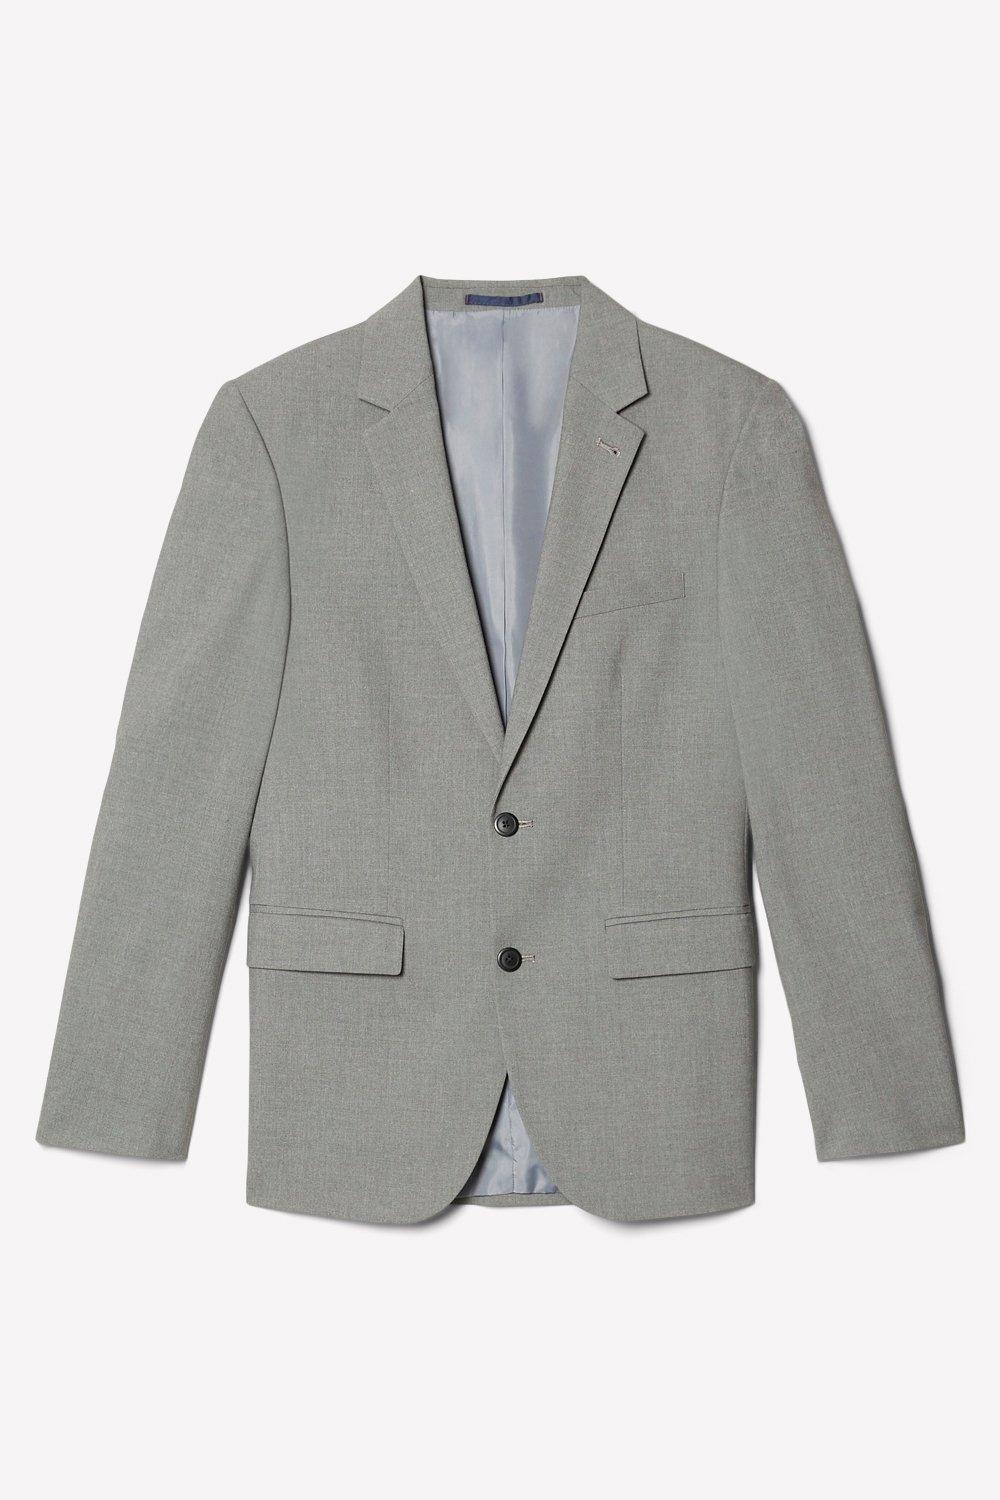 Burton Menswear London Mens Light Grey Textured Suit Jacket 